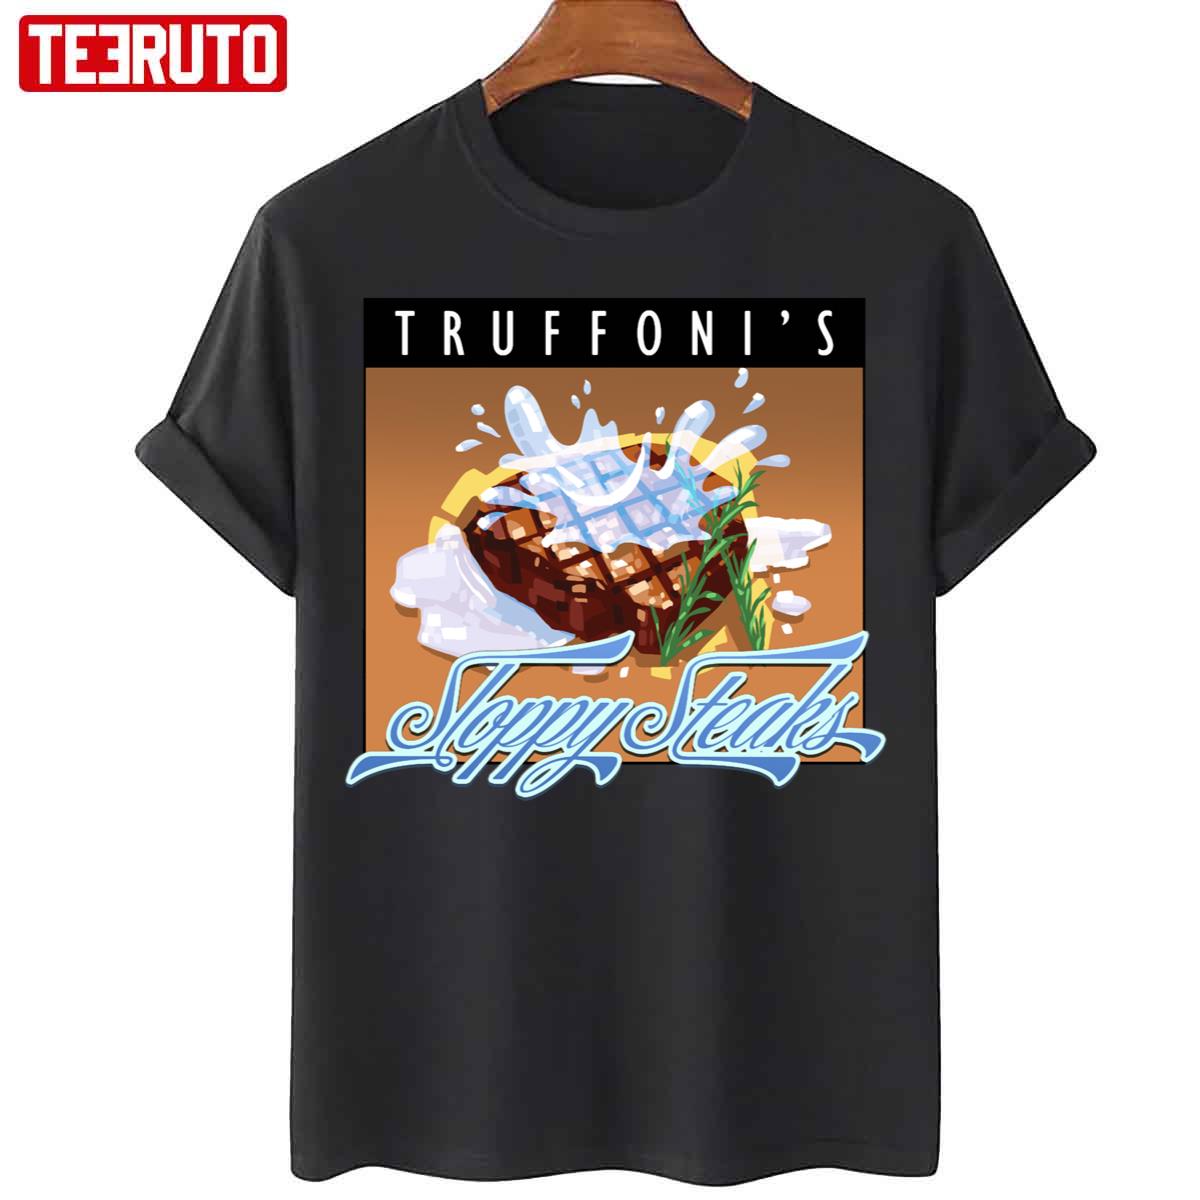 Truffoni’s Sloppy Steaks Unisex T-Shirt